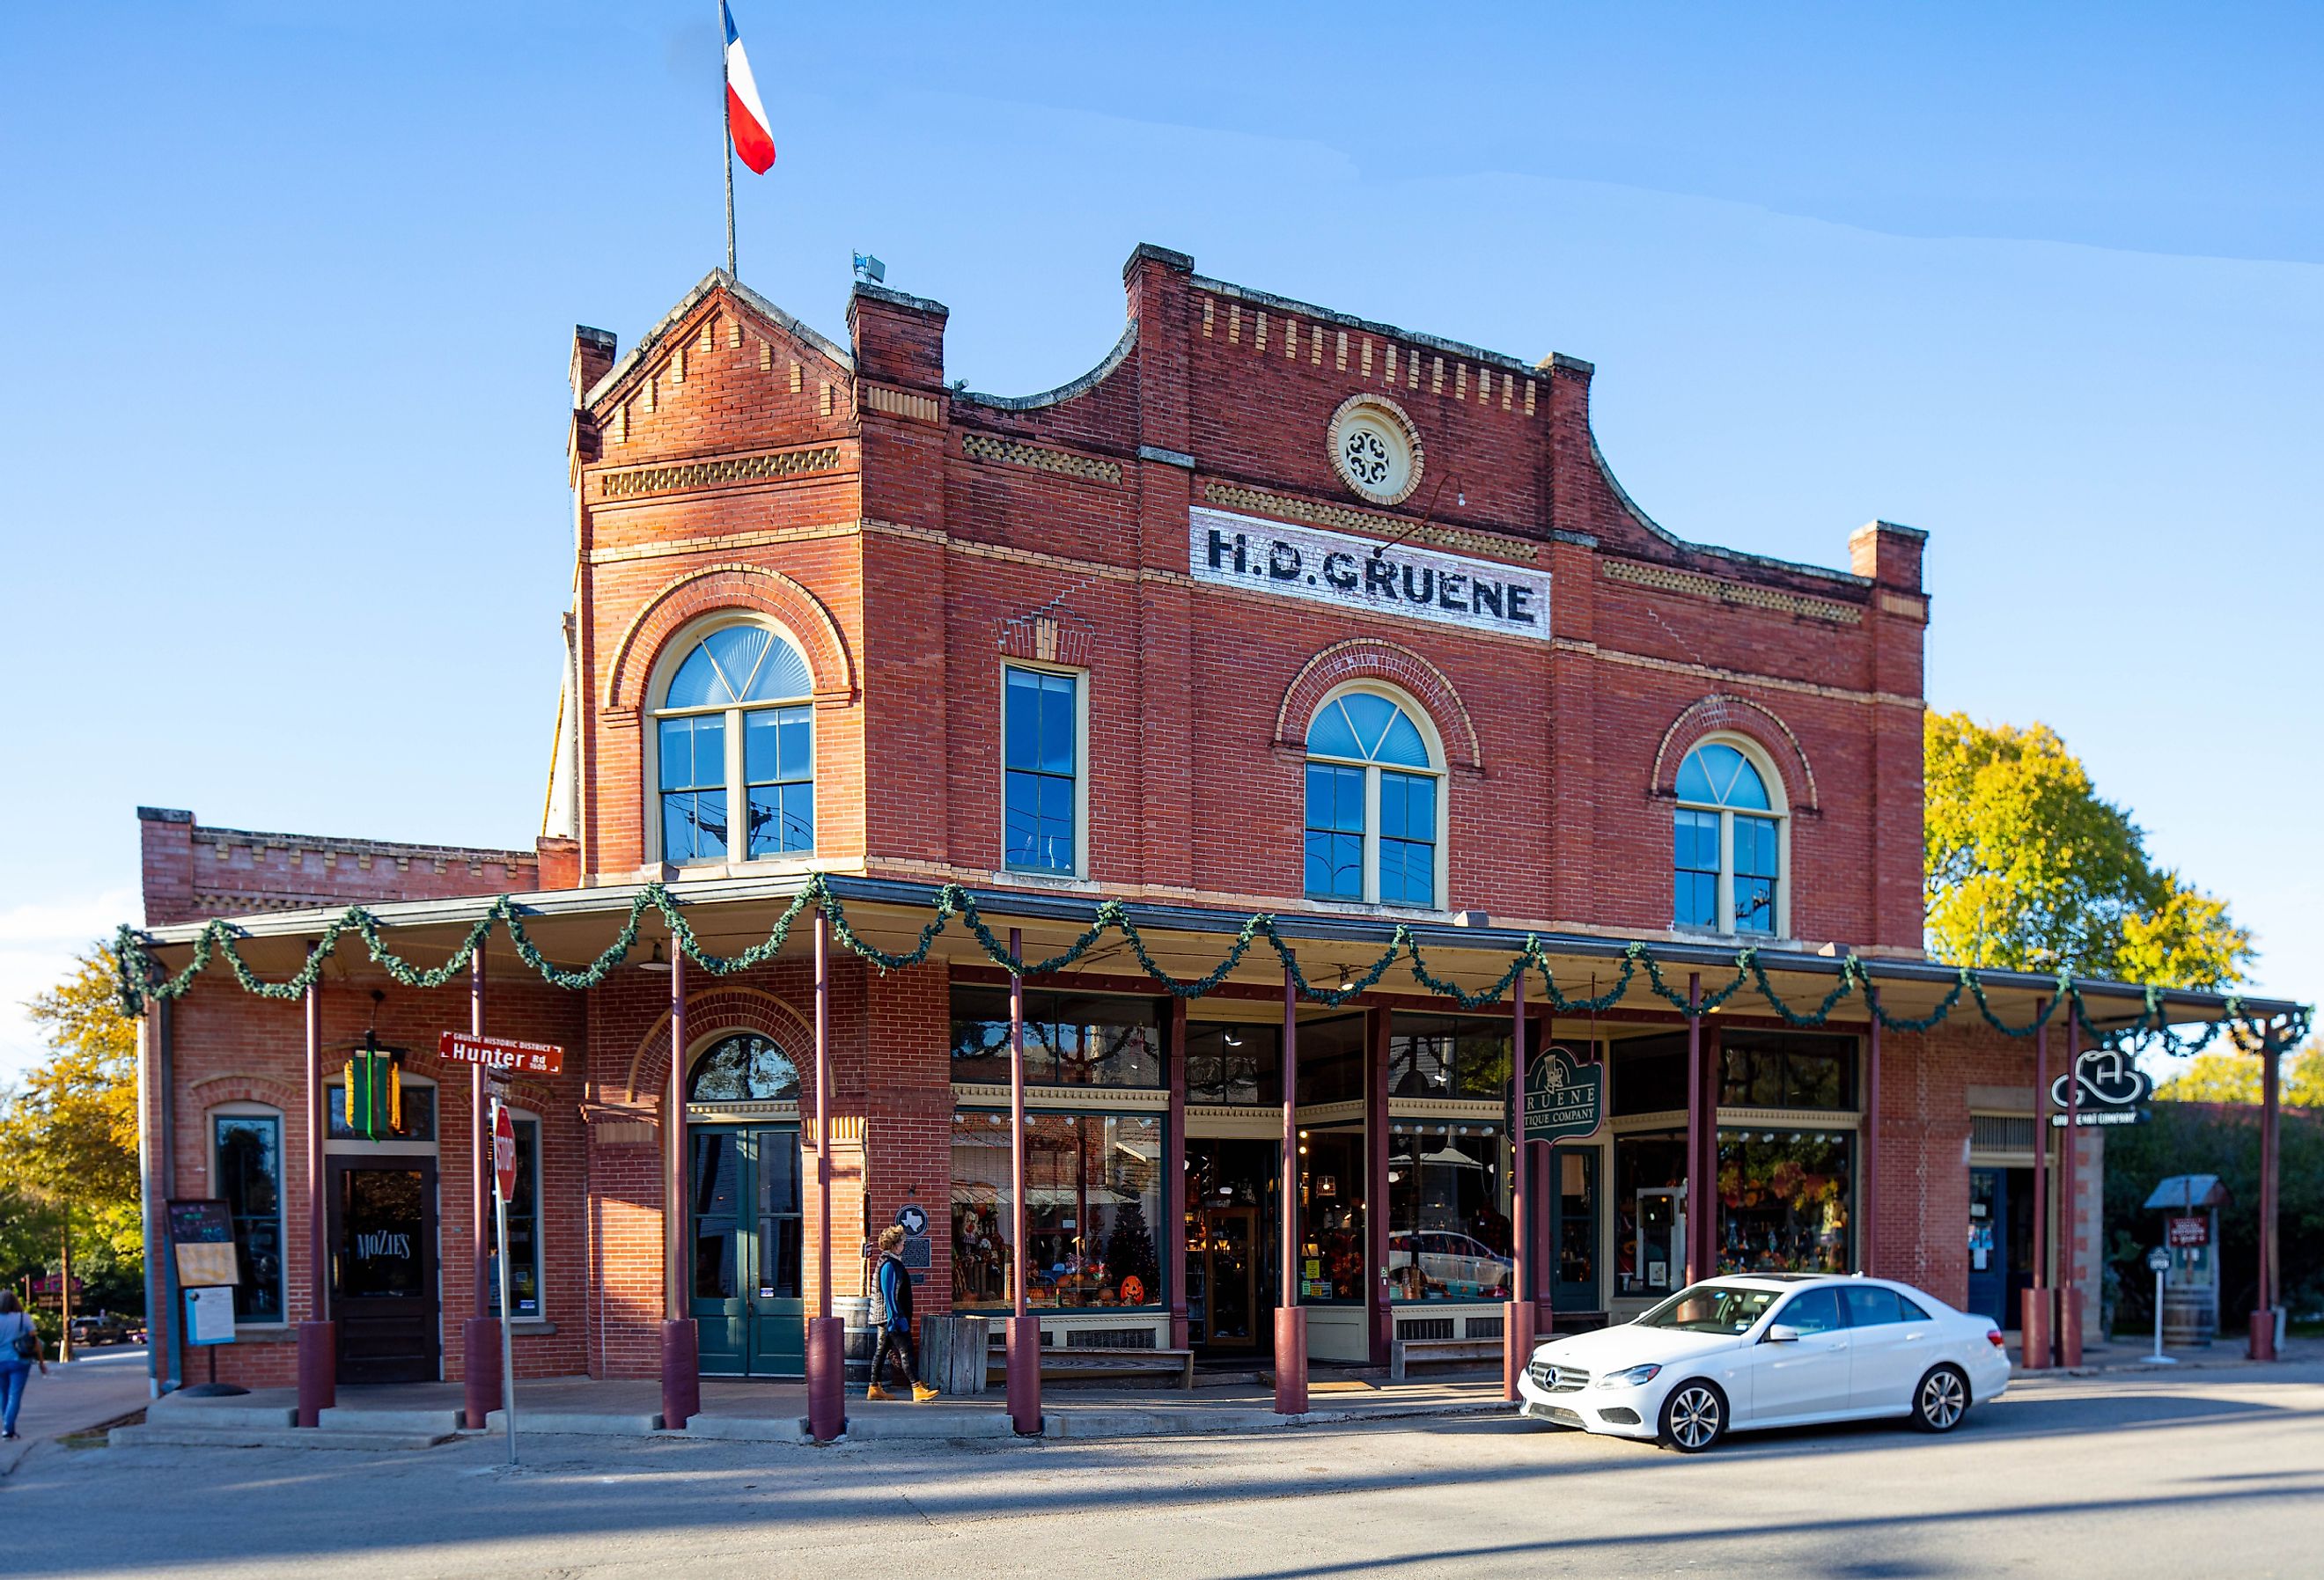 Old brick building housing an antique store, Gruene, Texas. Image credit Roberto Galan via Shutterstock.com